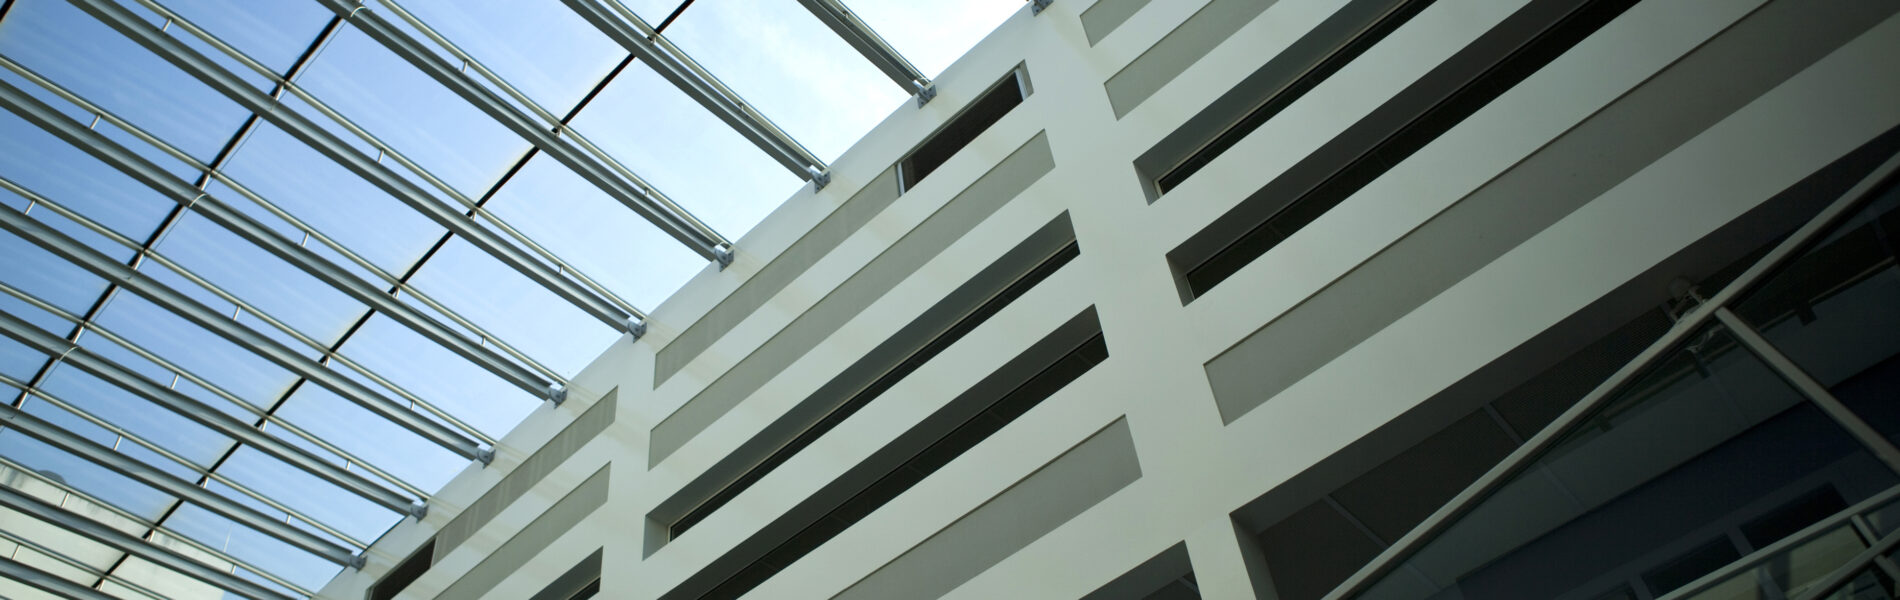 Glass roof inside a modern office building